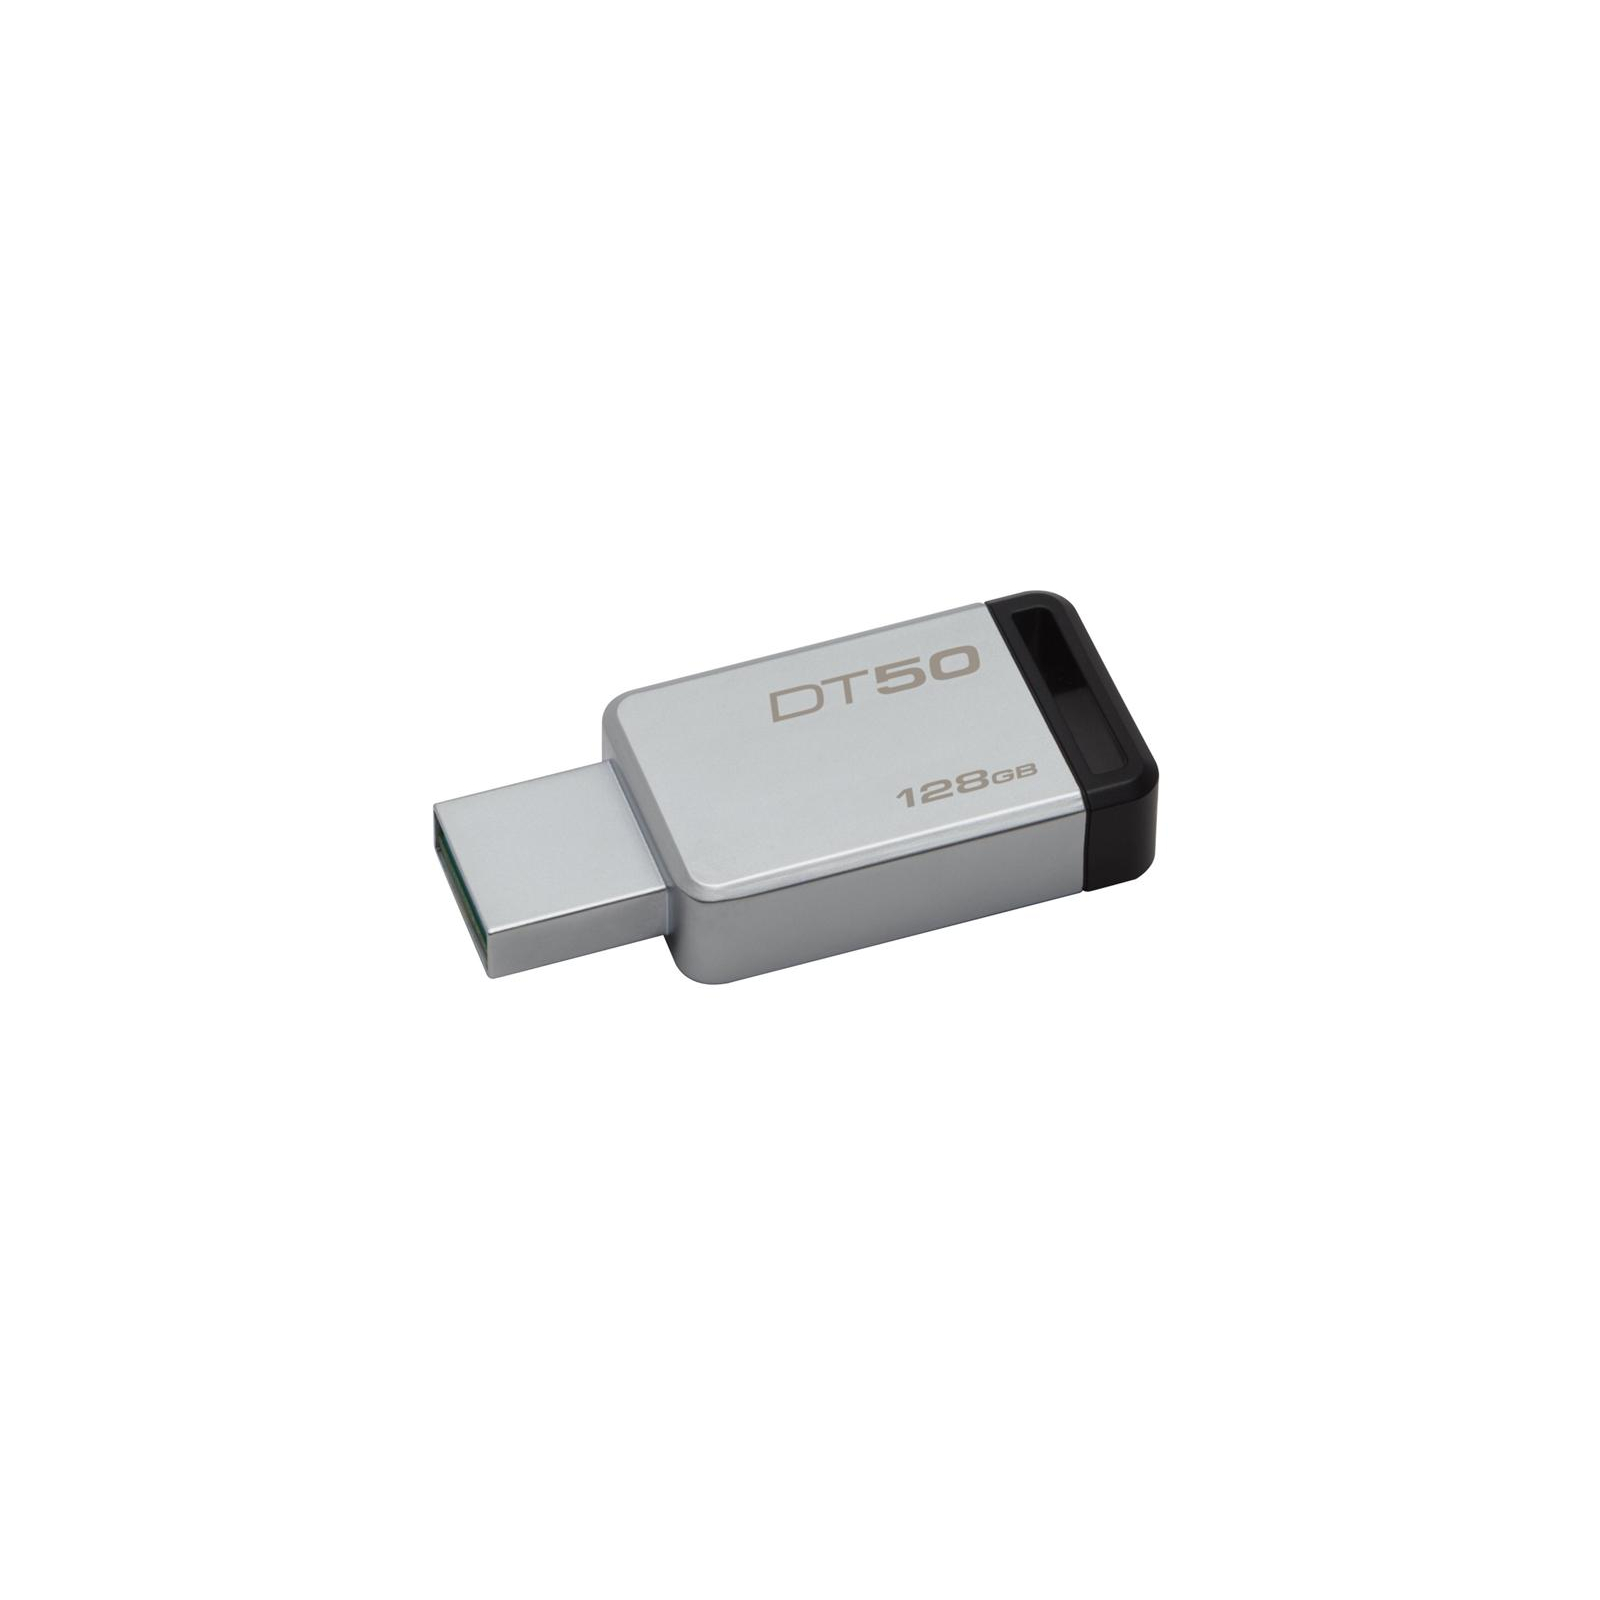 USB флеш накопитель Kingston 128GB DT50 USB 3.1 (DT50/128GB) изображение 3